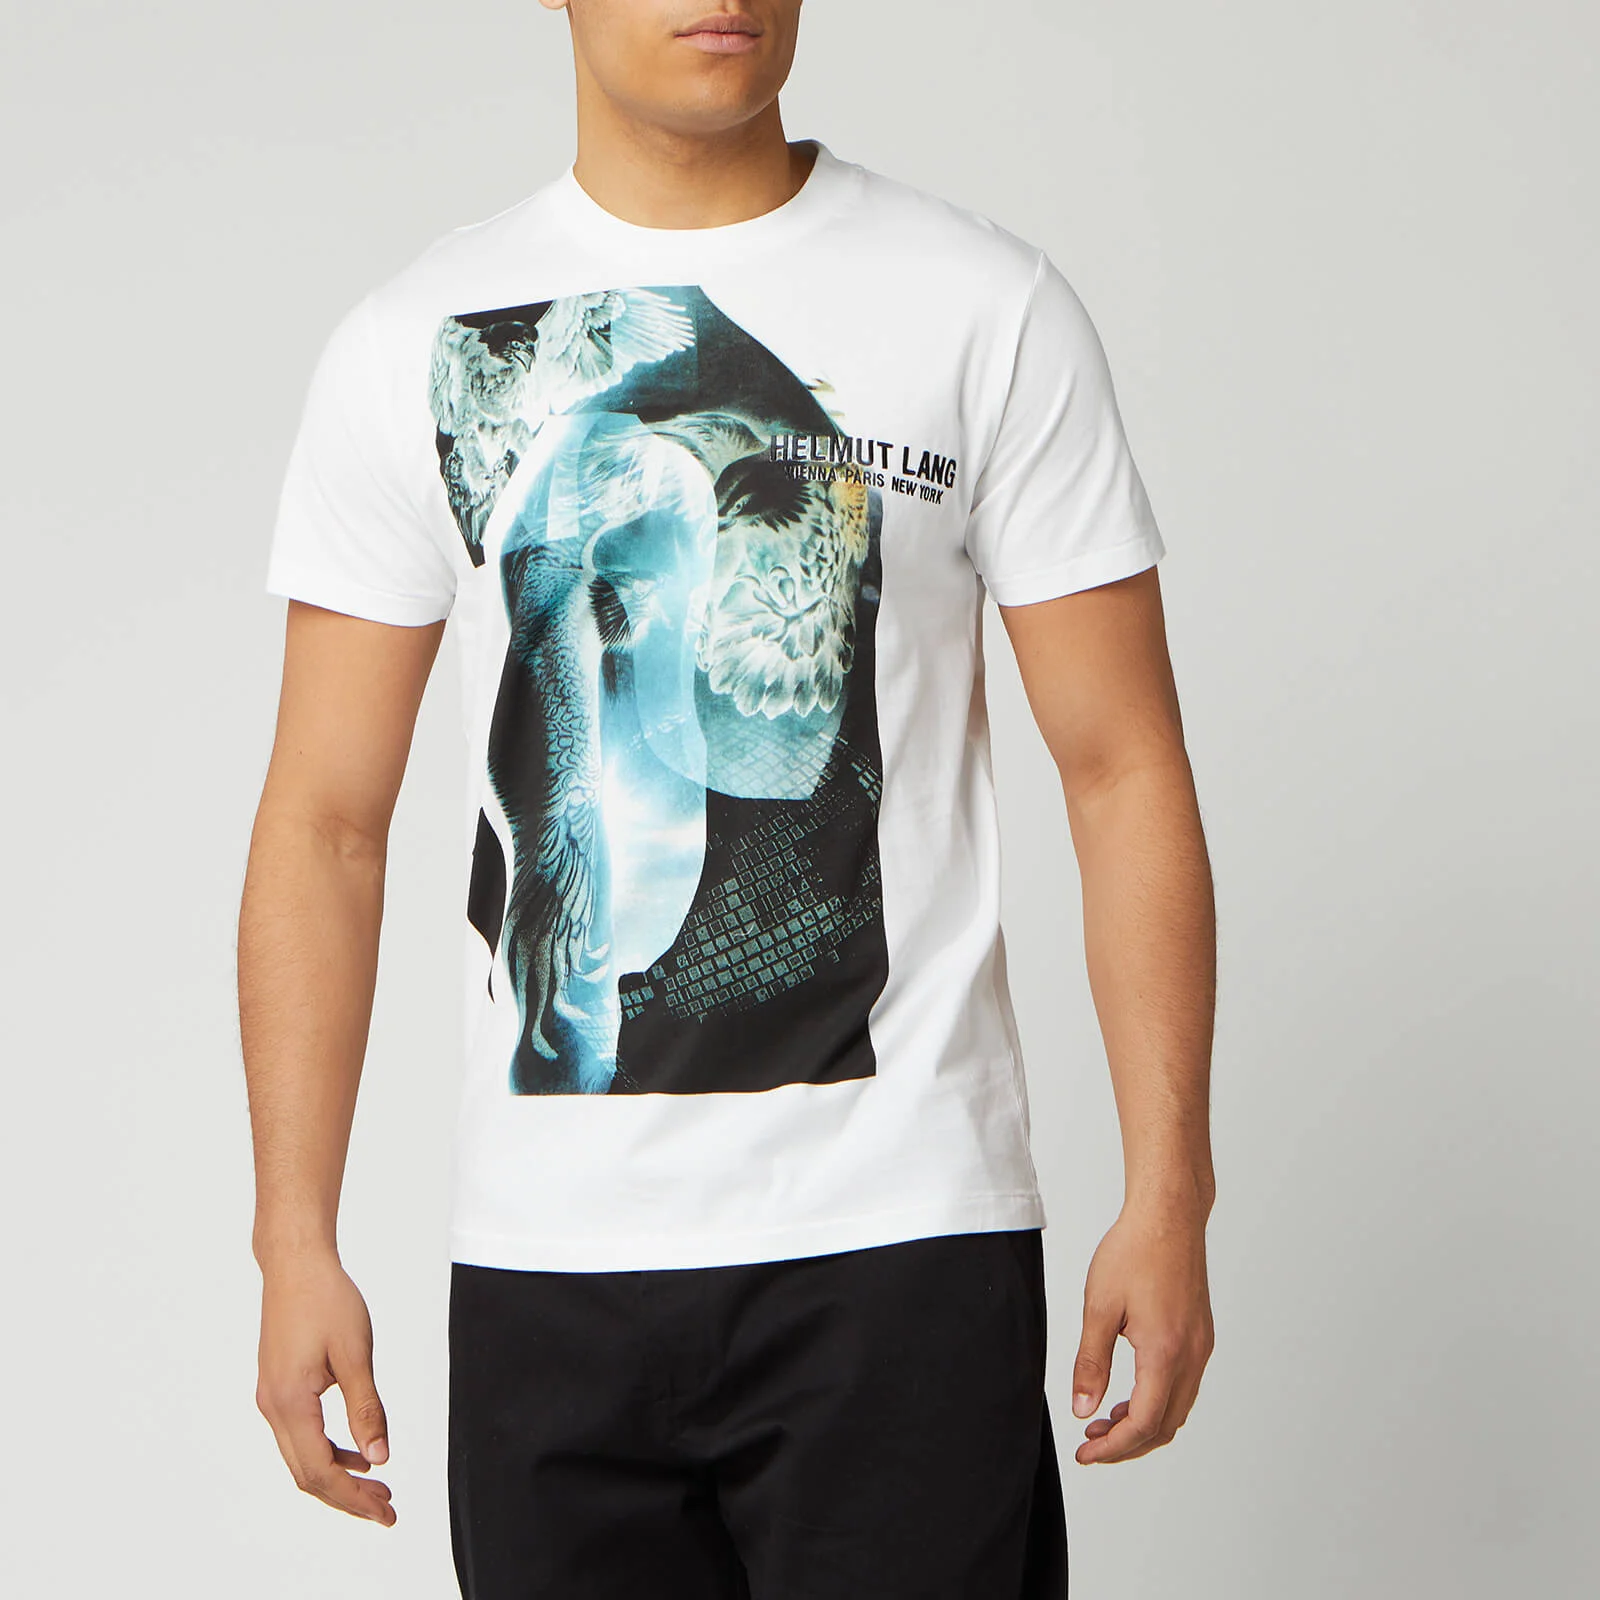 Helmut Lang Men's Standard Eagle T-Shirt - Chalk White Image 1